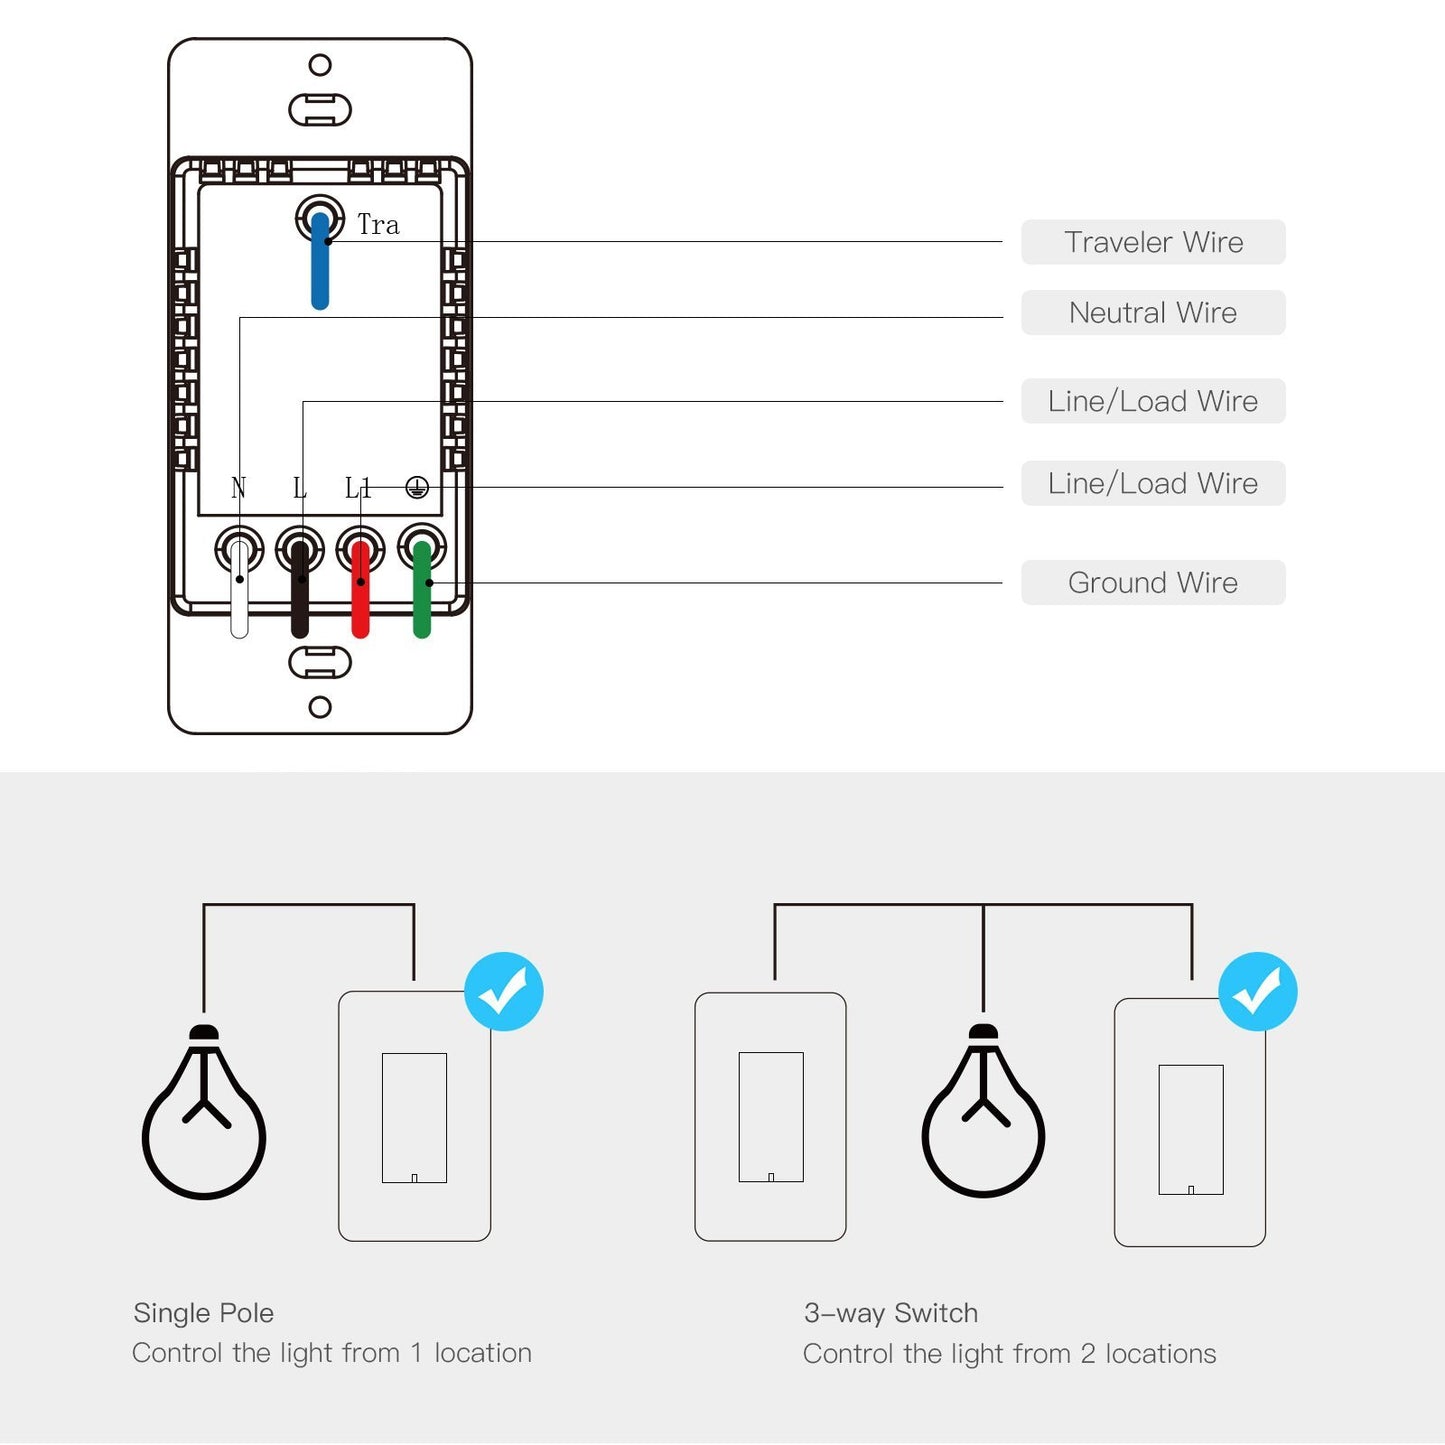 Snow Rock Series New 3-Way WiFi Smart Light Switch US Version - Moes